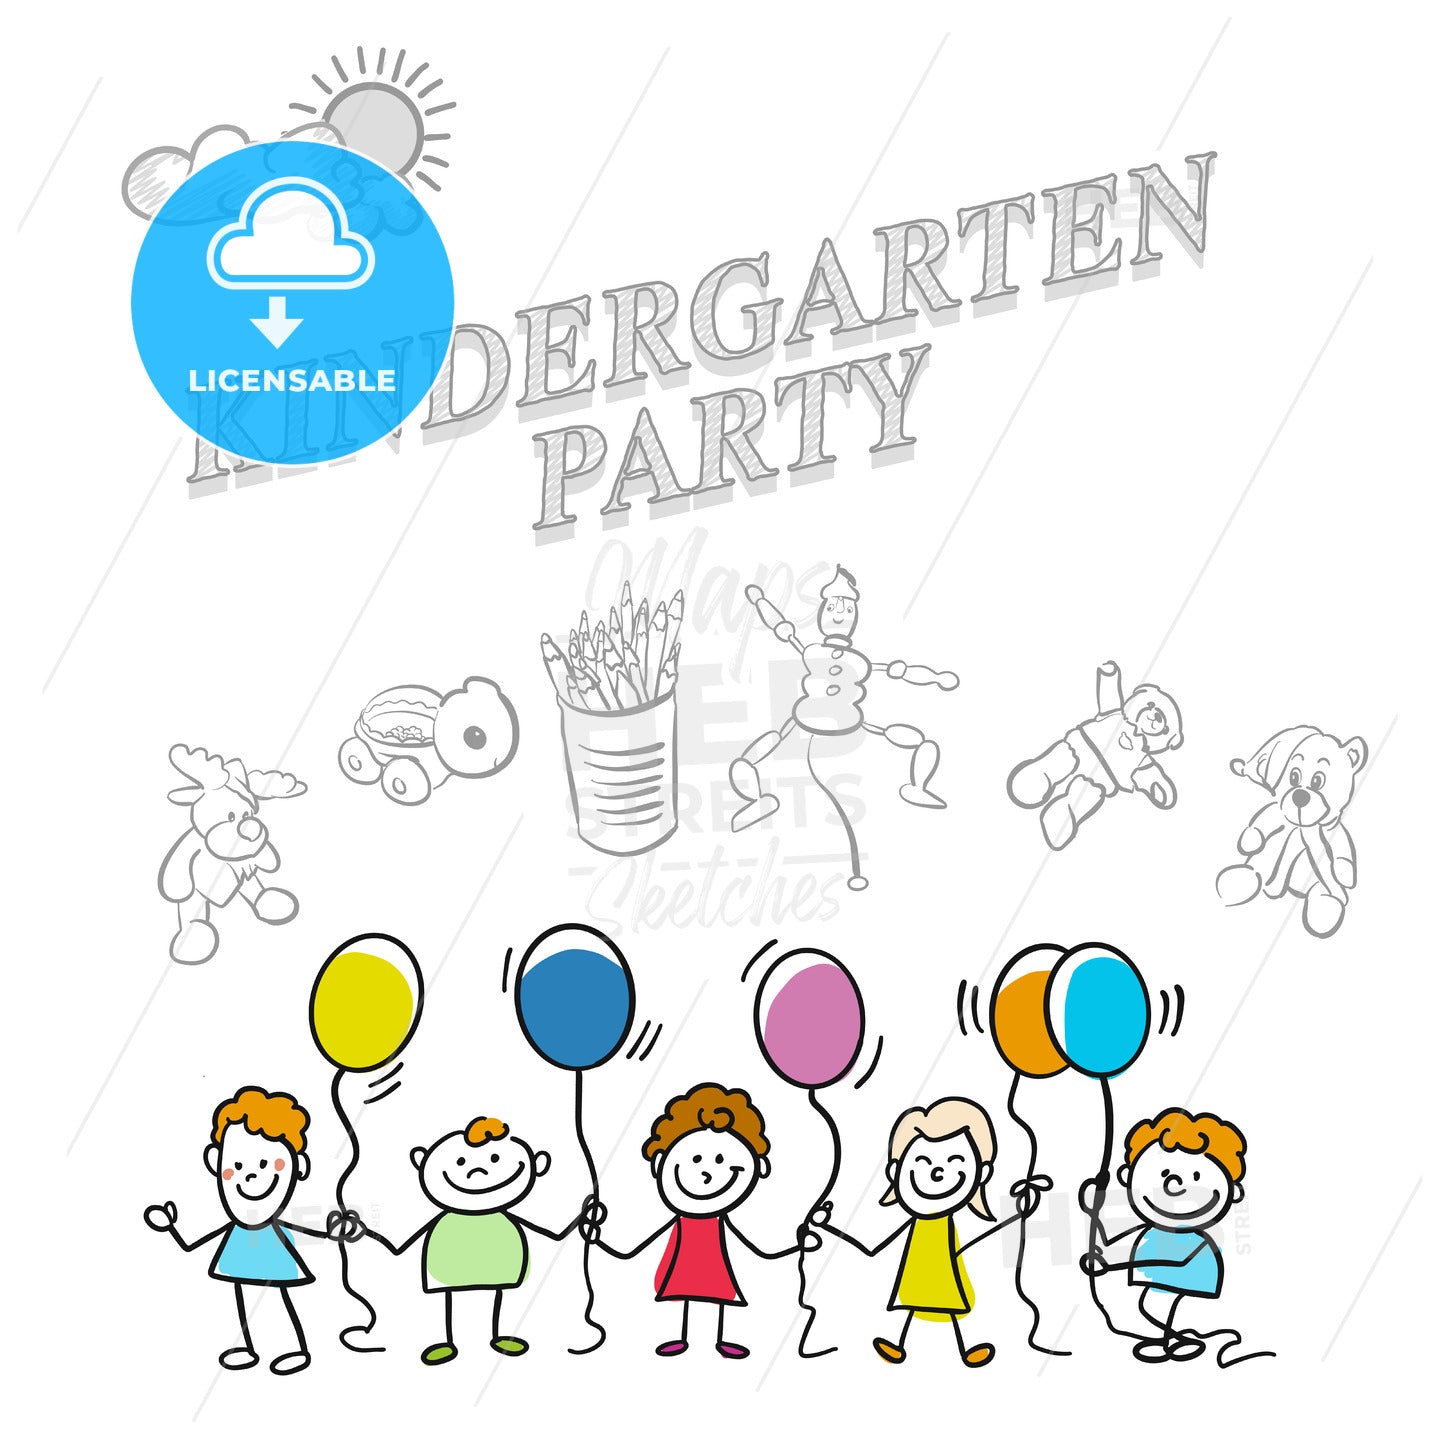 Kindergarten party marketing cover – instant download